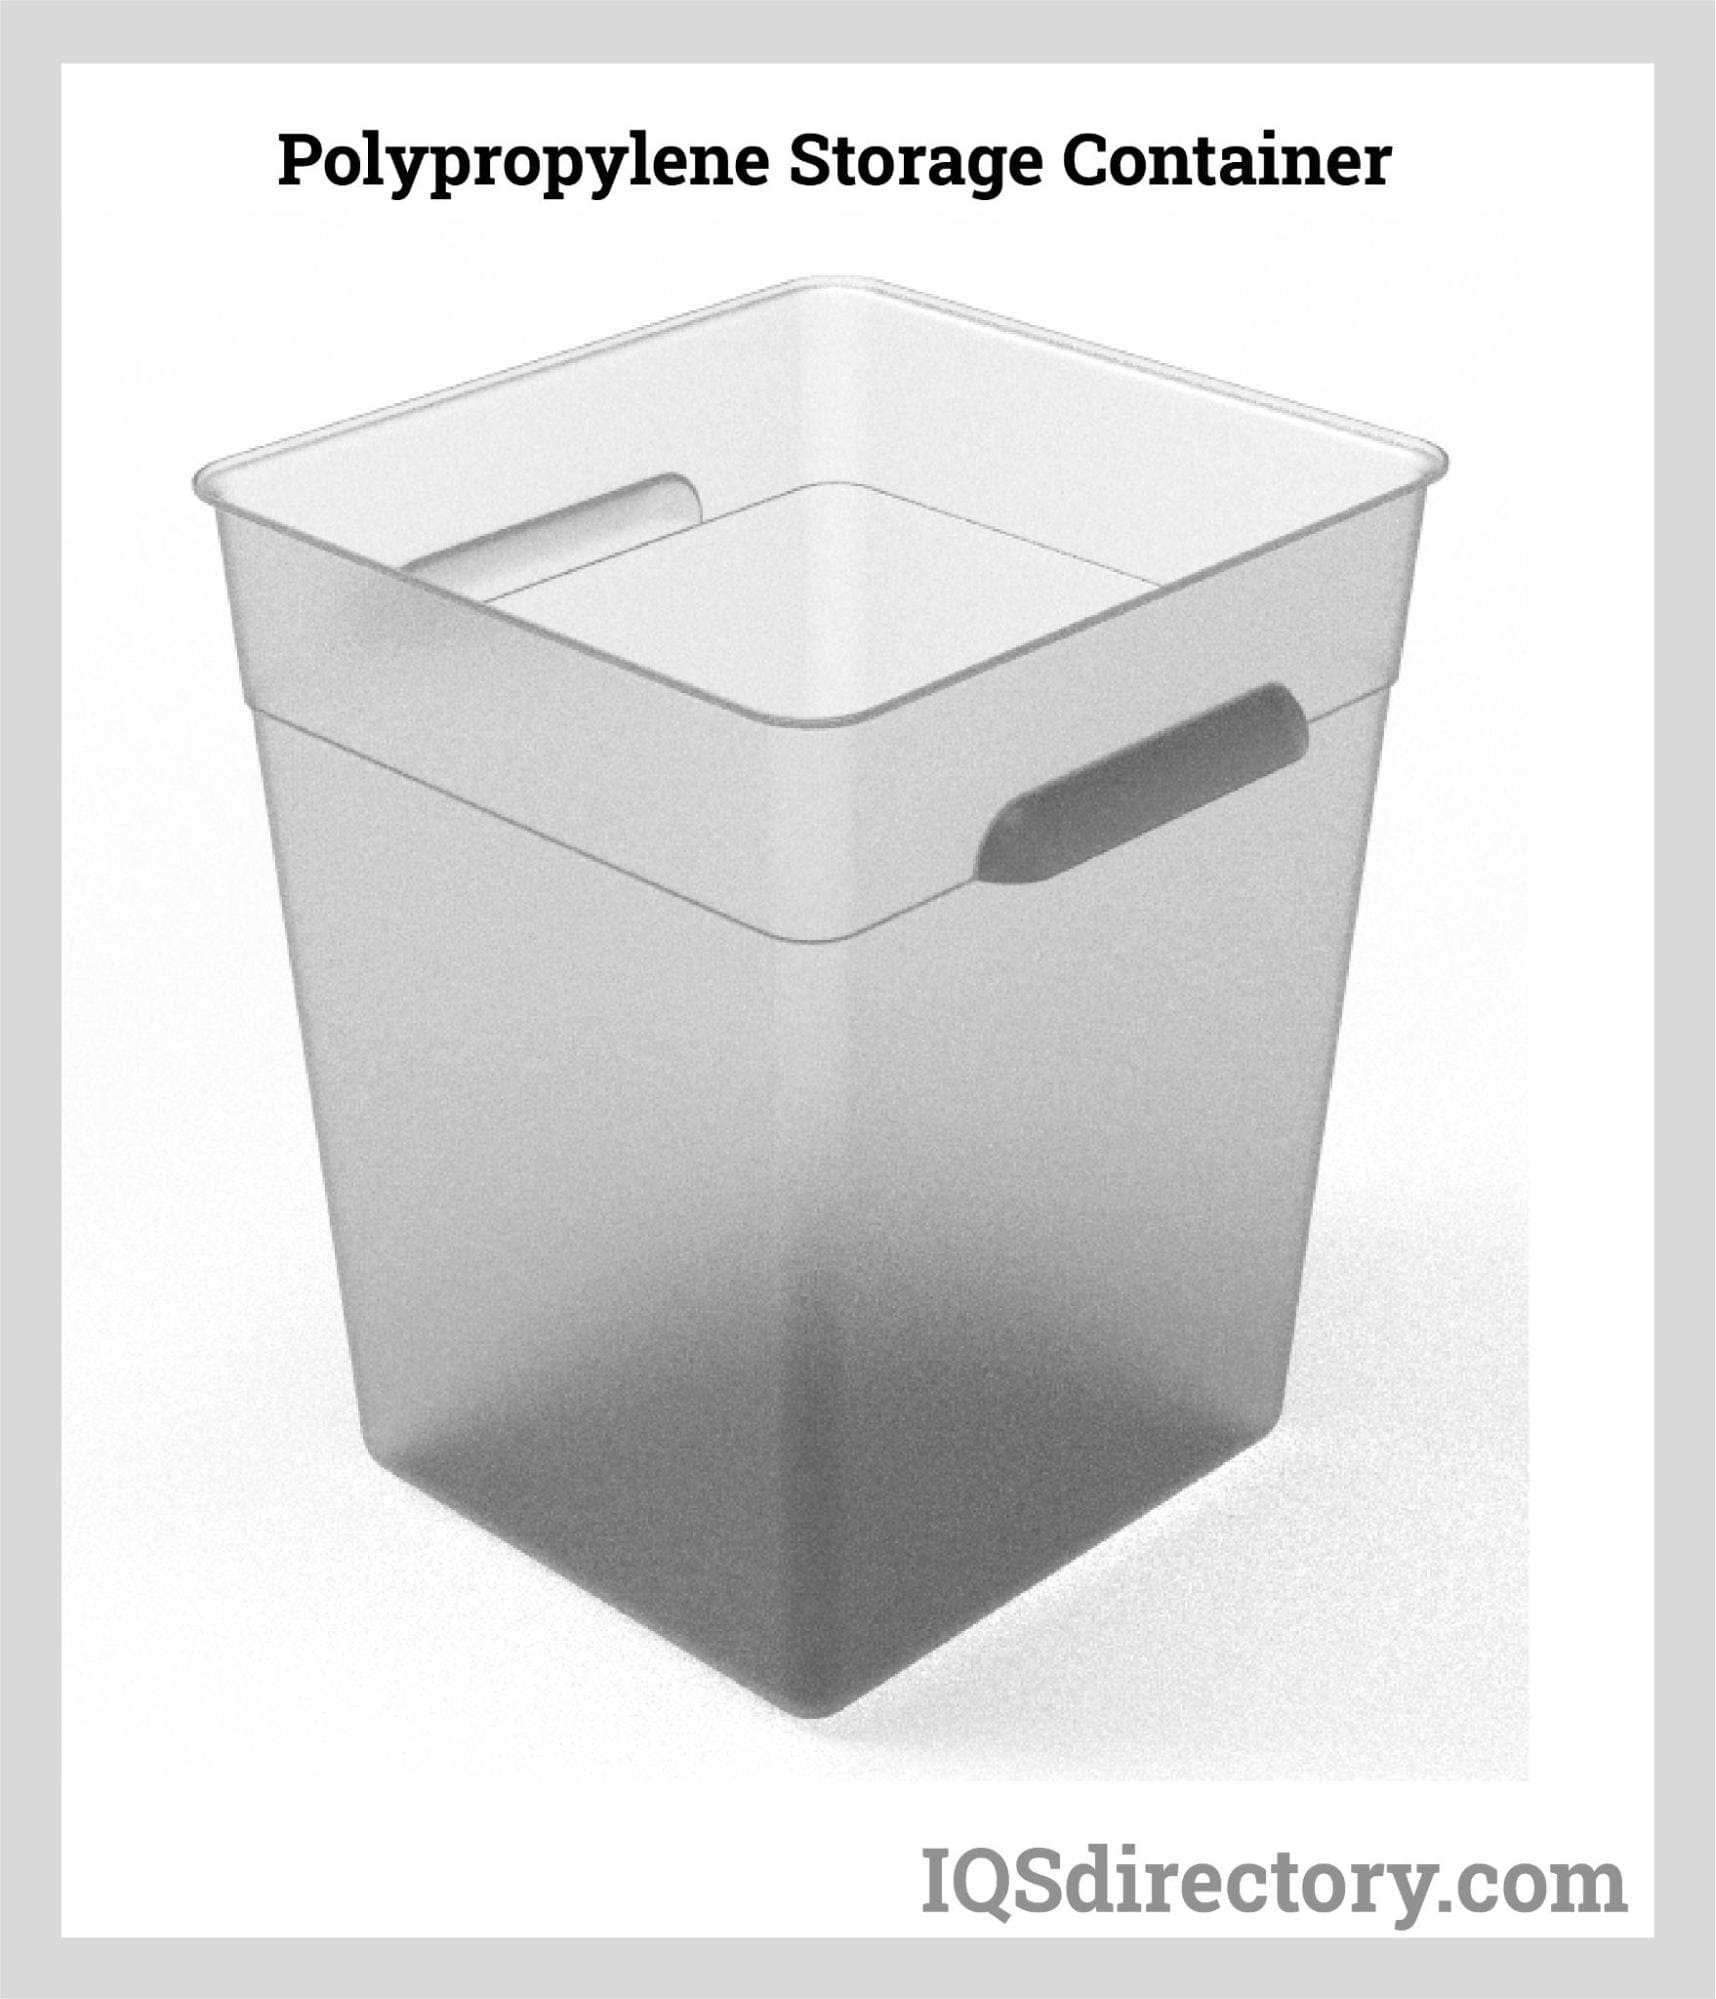 Polypropylene Storage Container